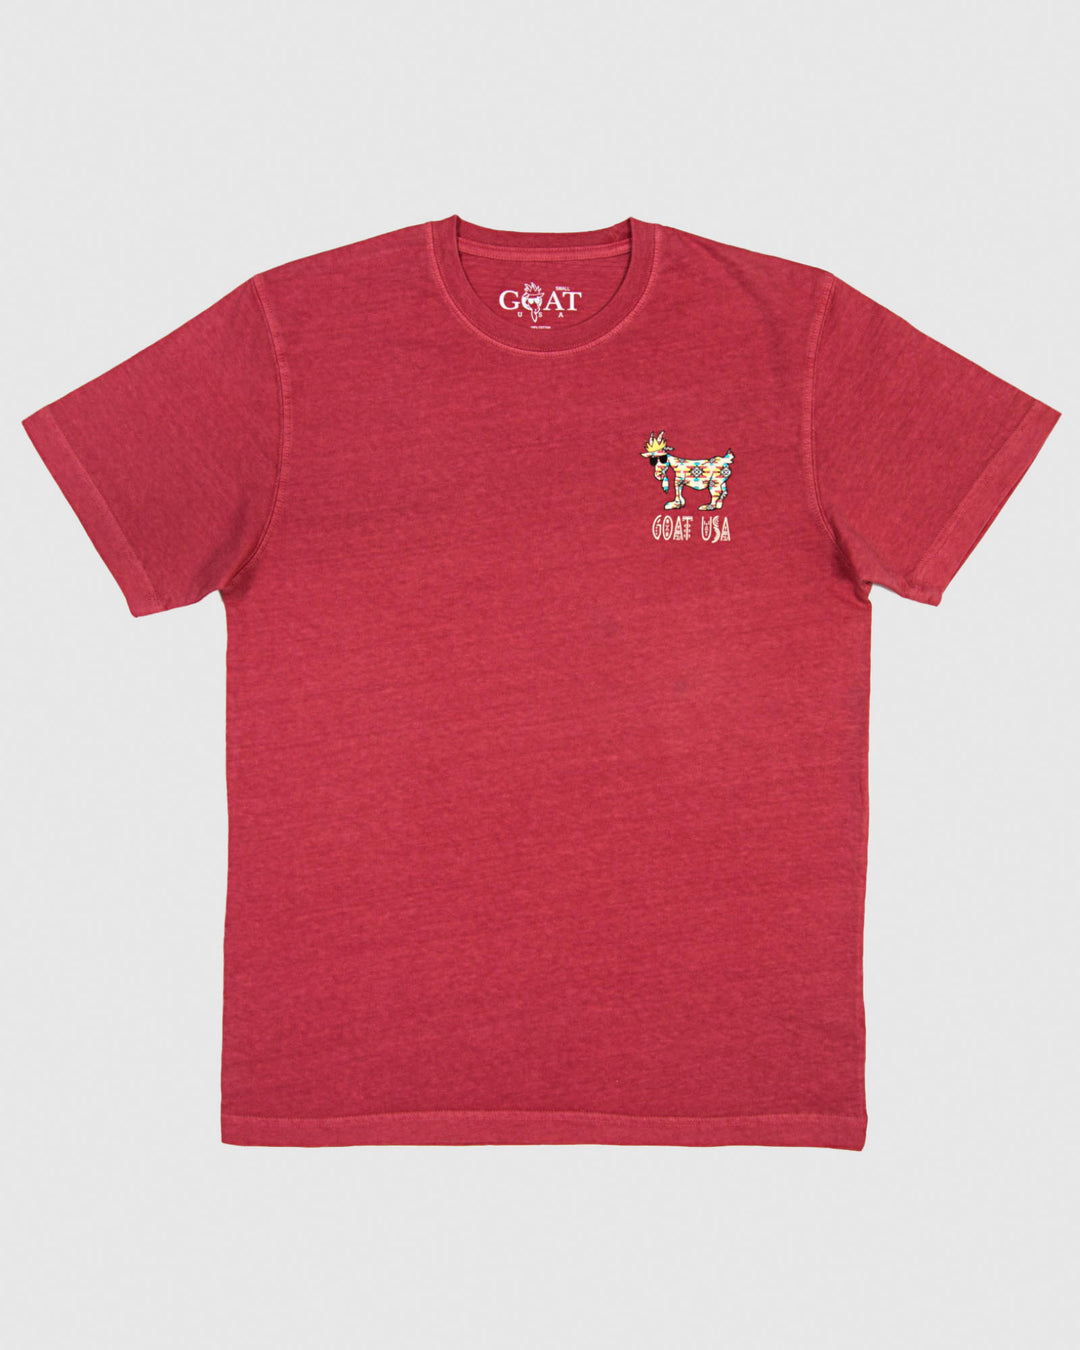 Frontside of crimson red shirt with sedona inspired goat on left chest